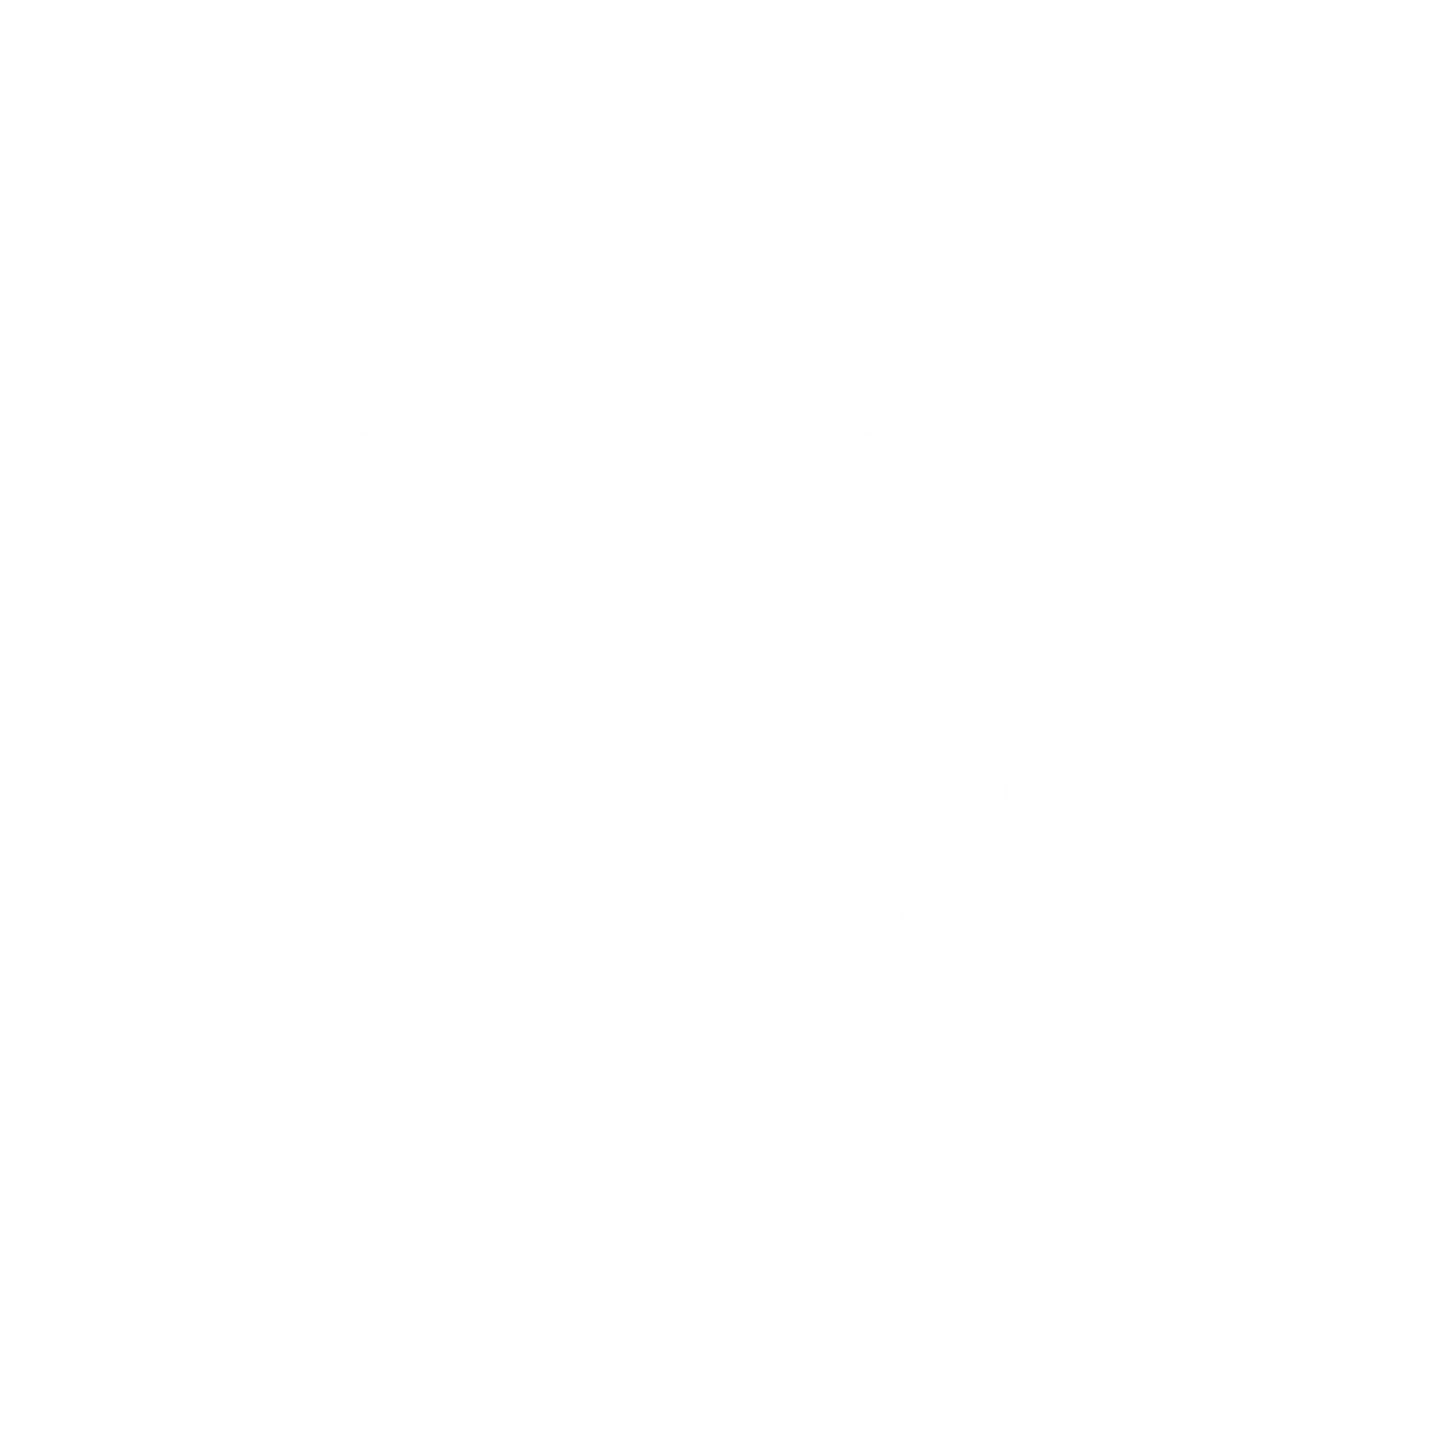 LUCKY CHARMER